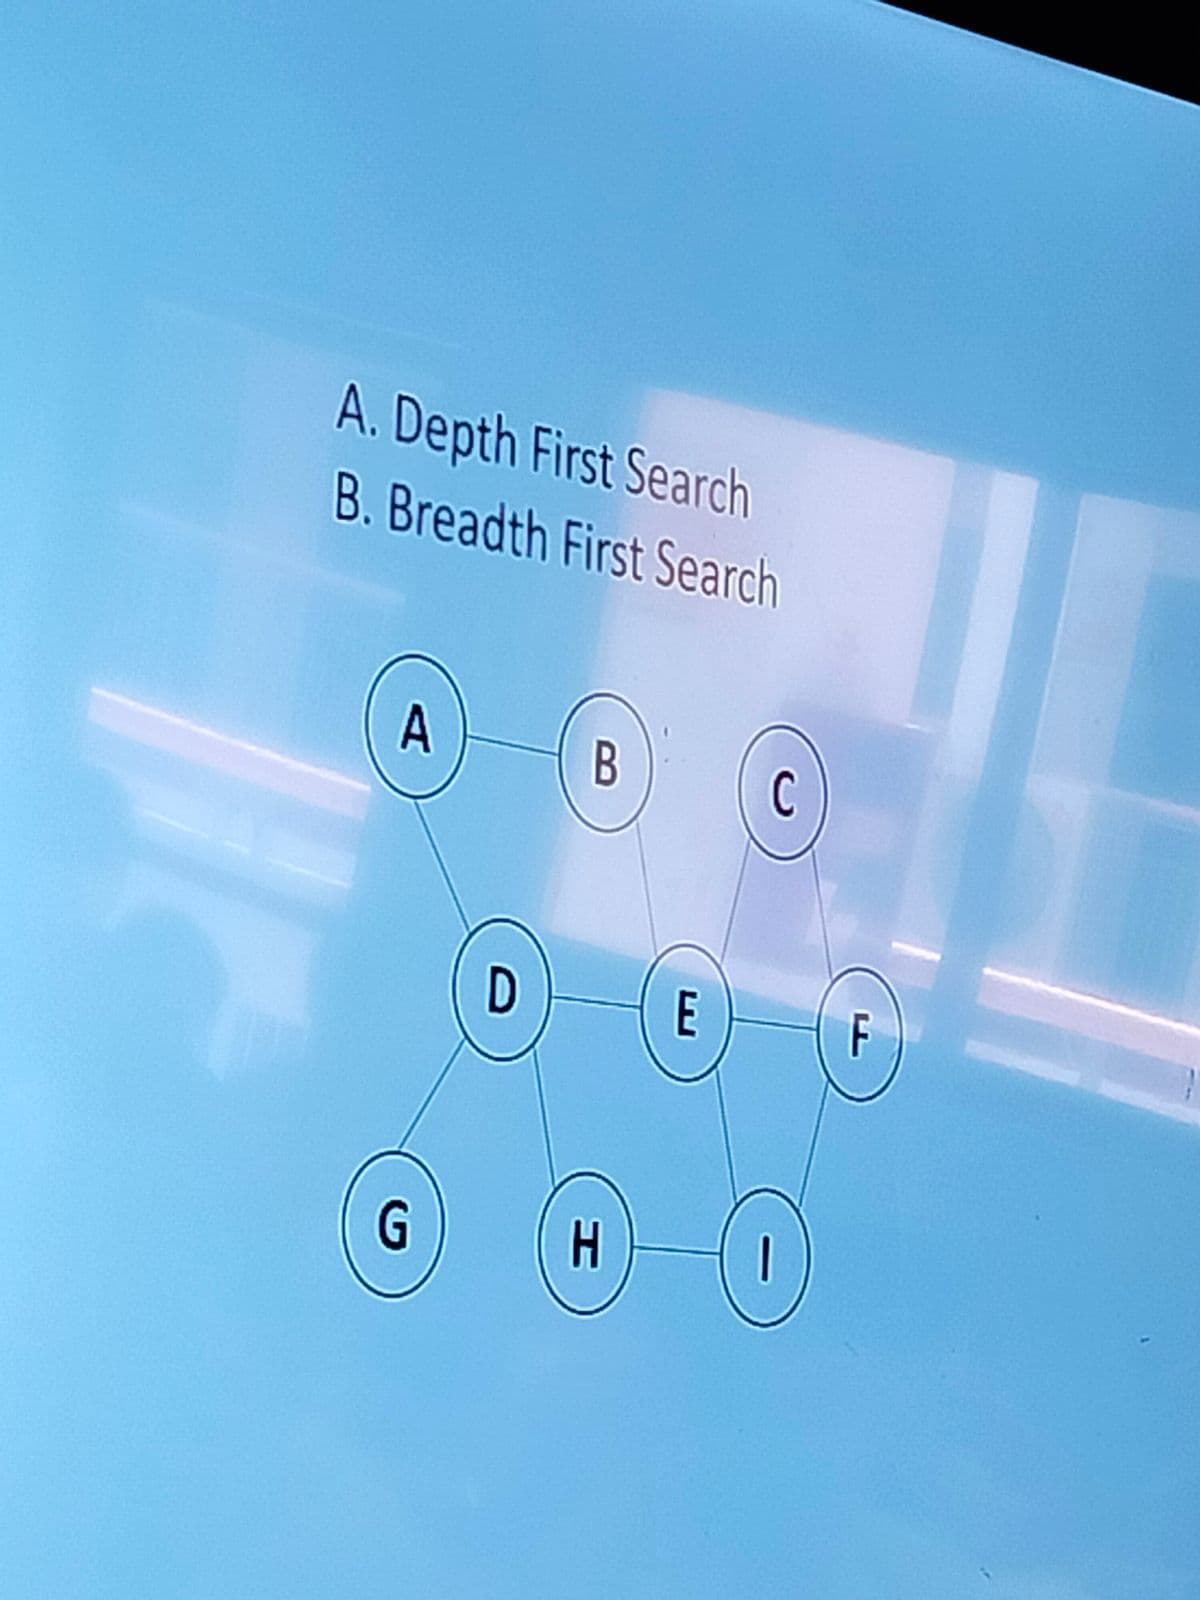 A. Depth First Search
B. Breadth First Search
A
G
D
B
H
E
C
D
F